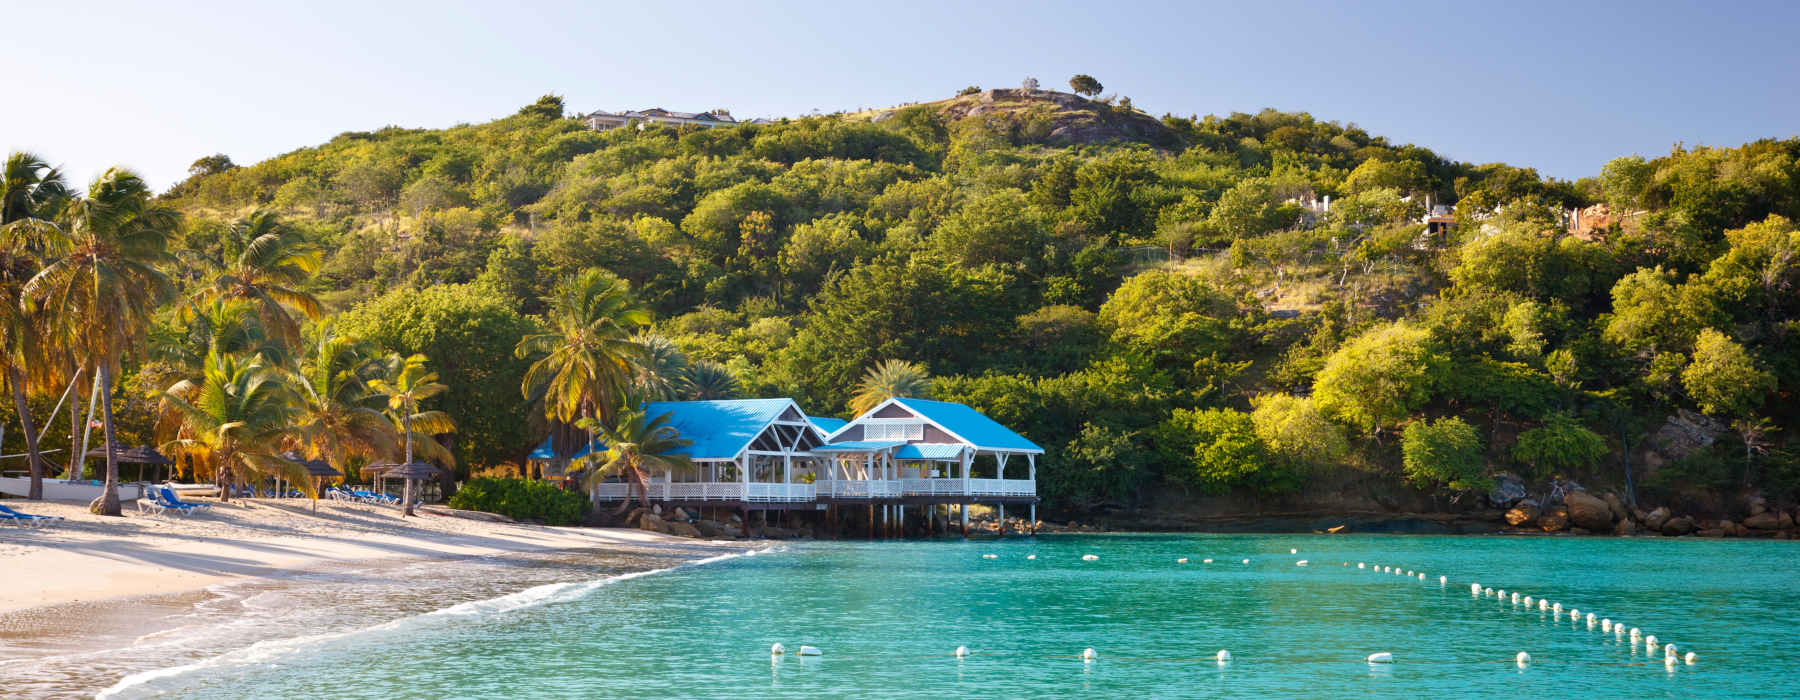 Half Moon Bay Beach, Antigua And Barbuda - Times of India Travel